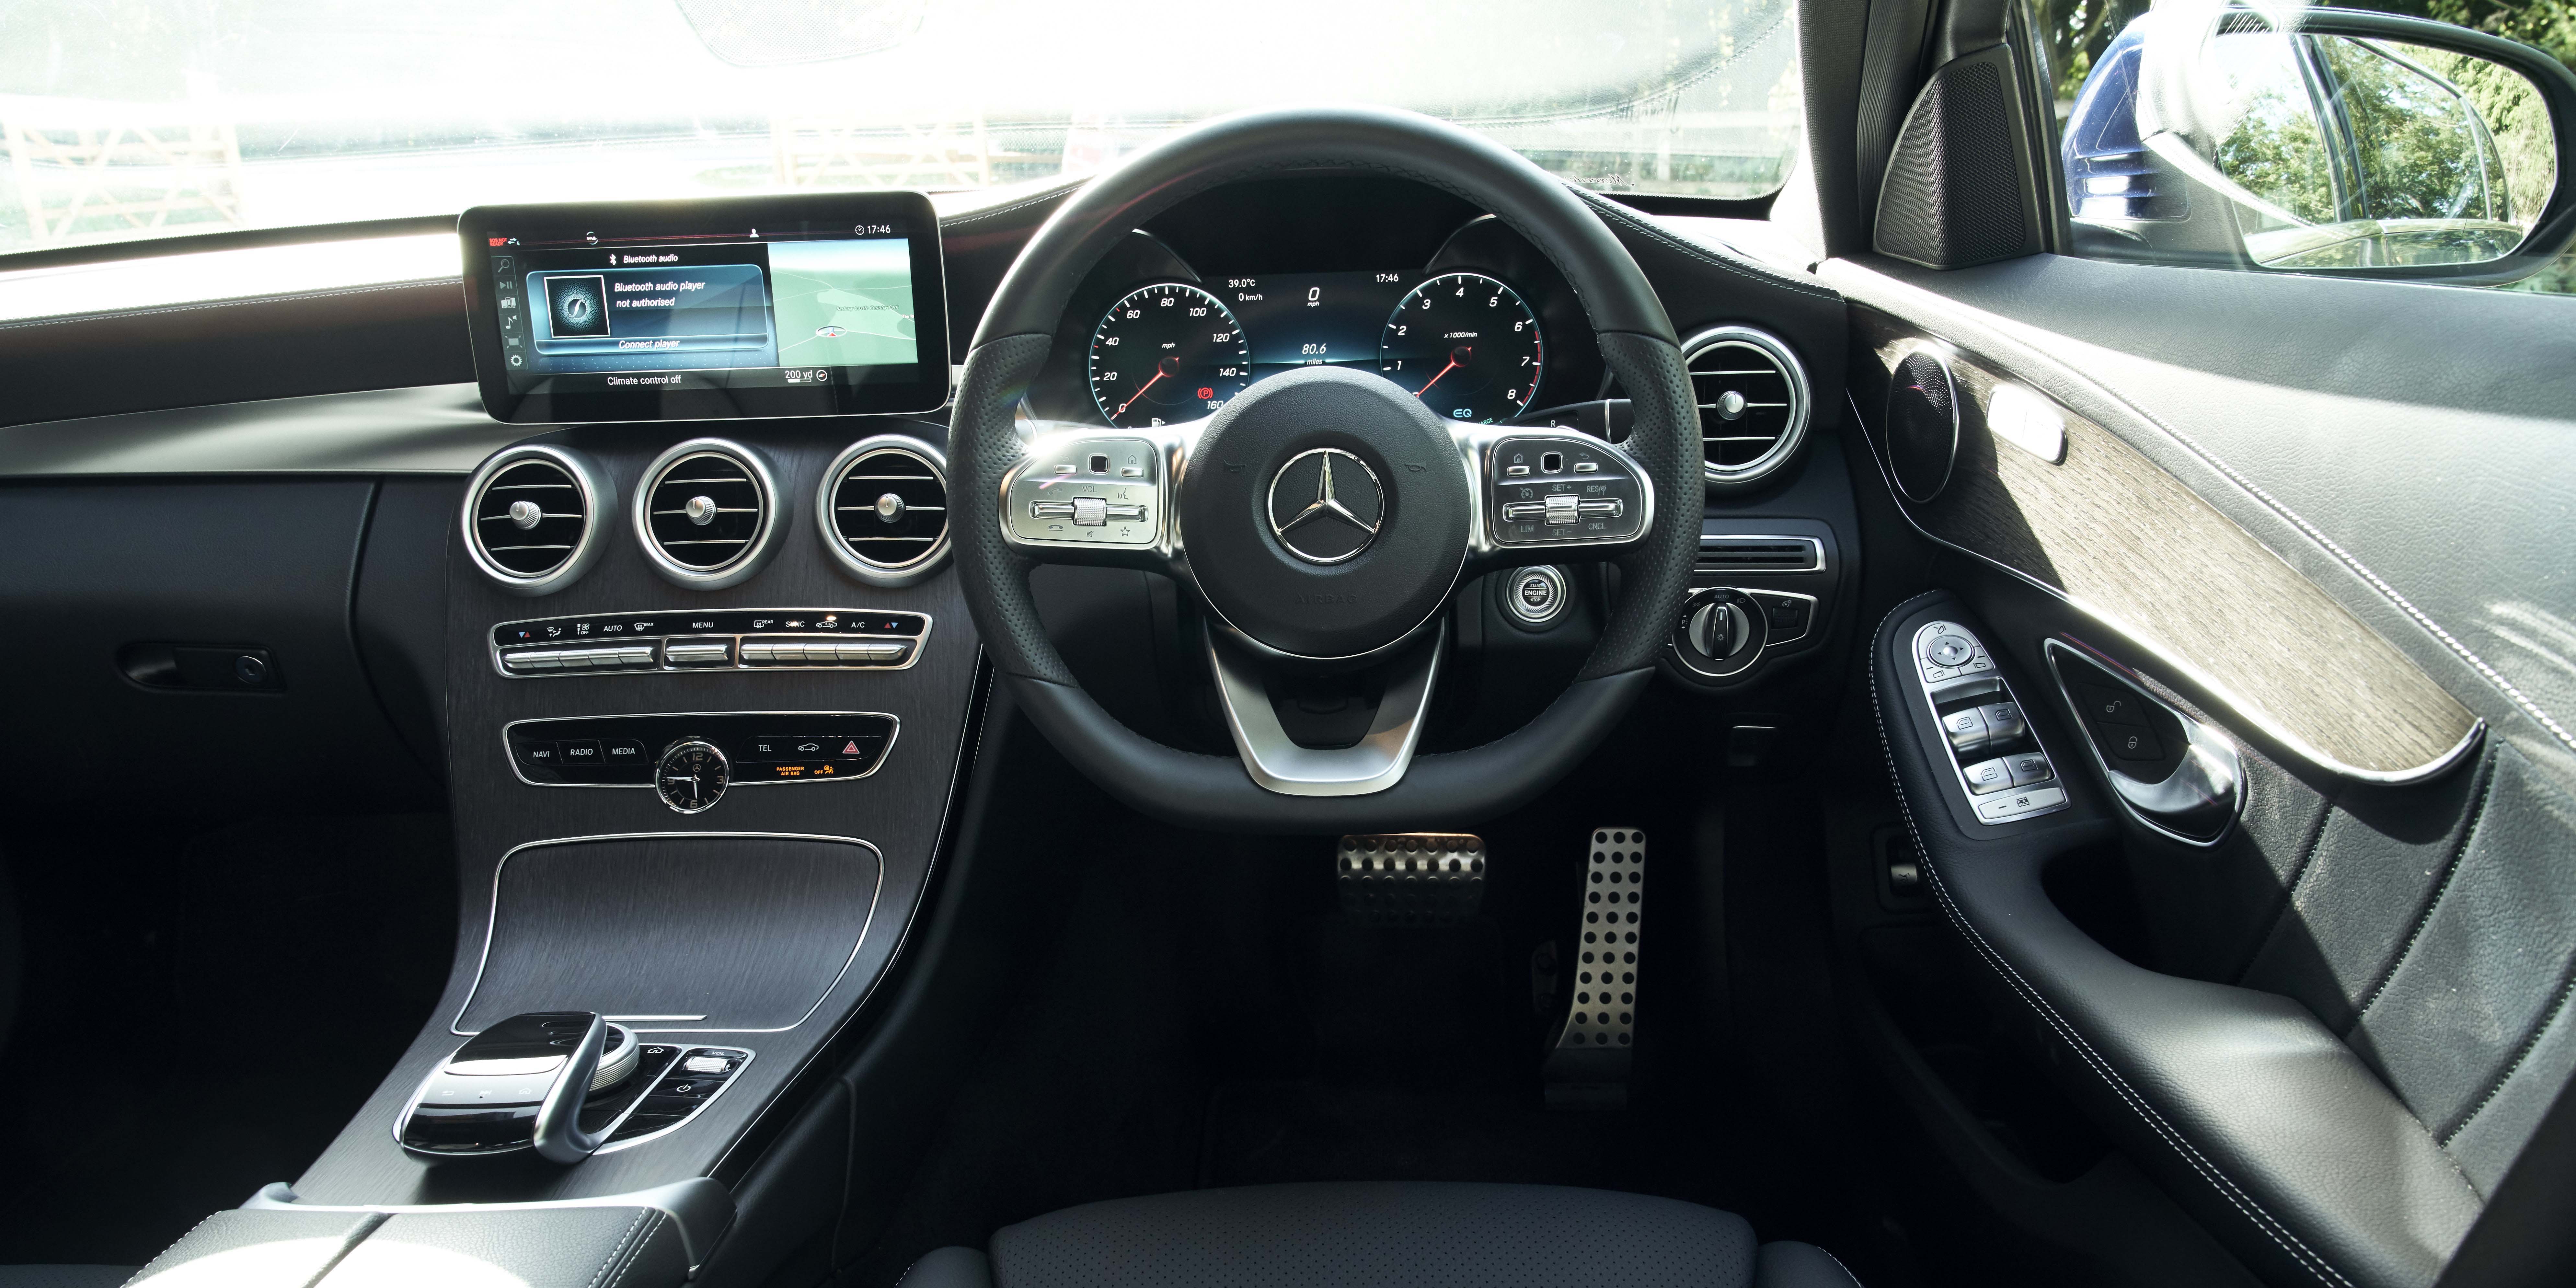 Mercedes C Class Saloon Interior Infotainment Carwow